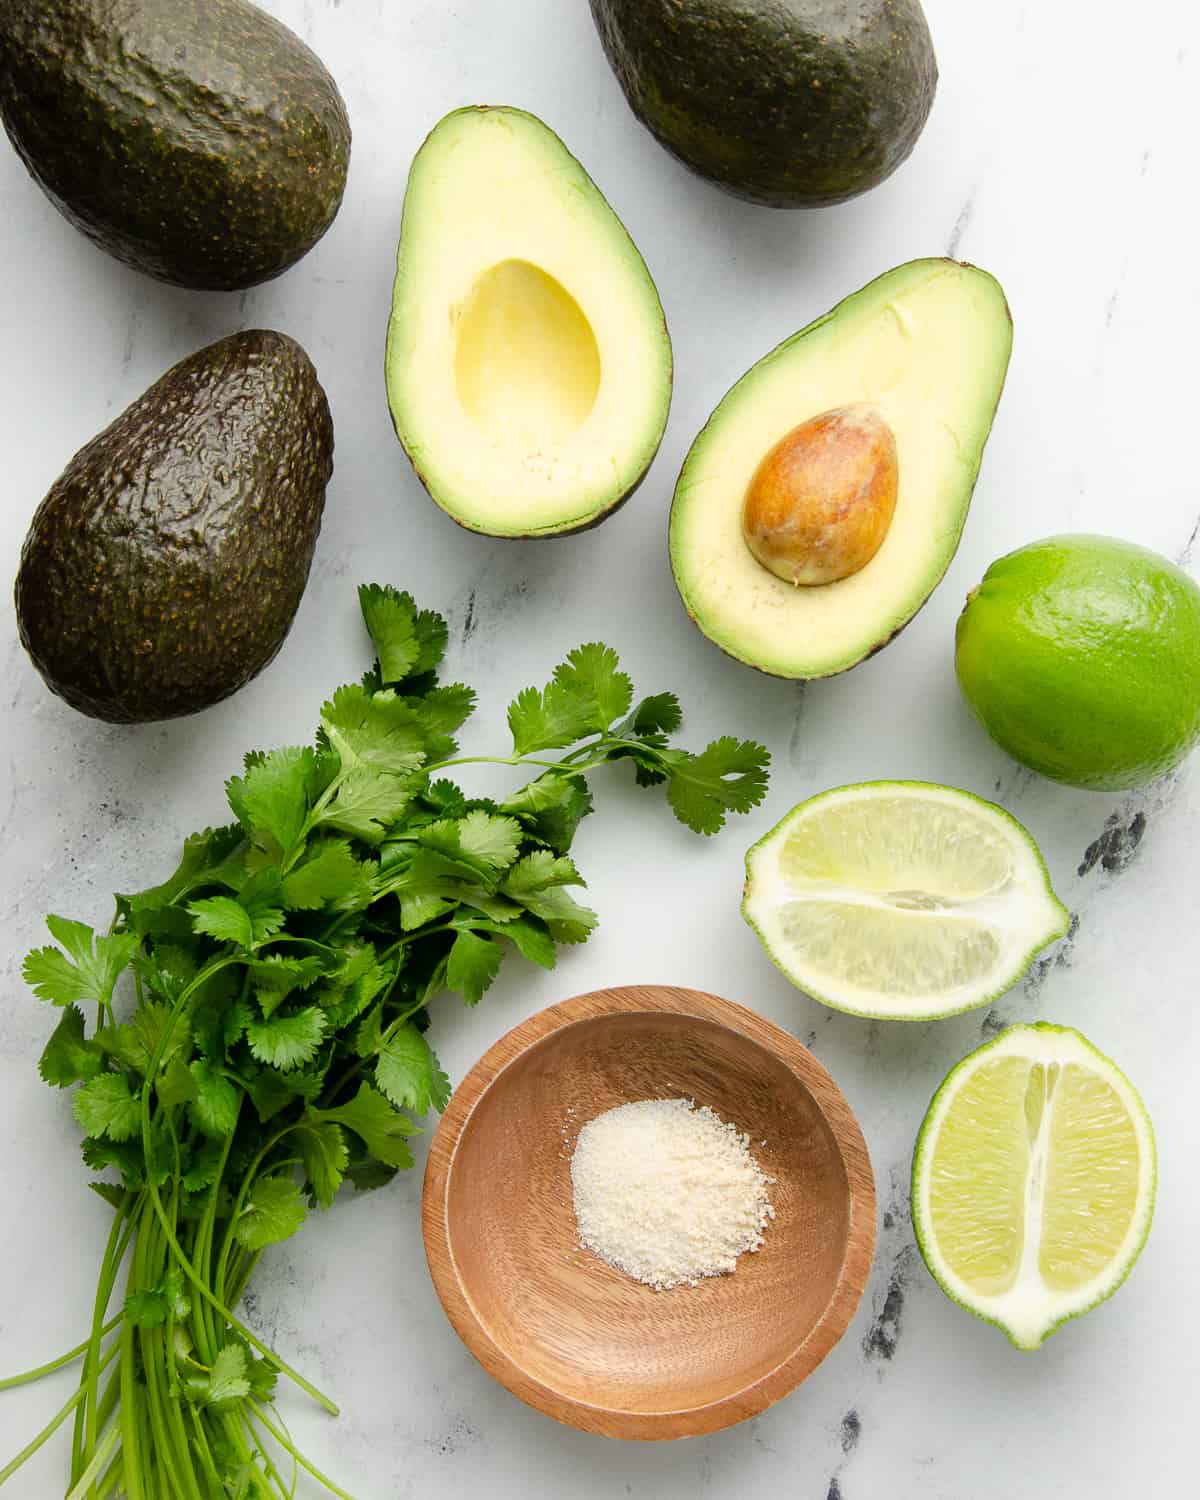 Ingredients needed to make 4 ingredient guacamole. Avocados, garlic salt, cilantro, and limes. 